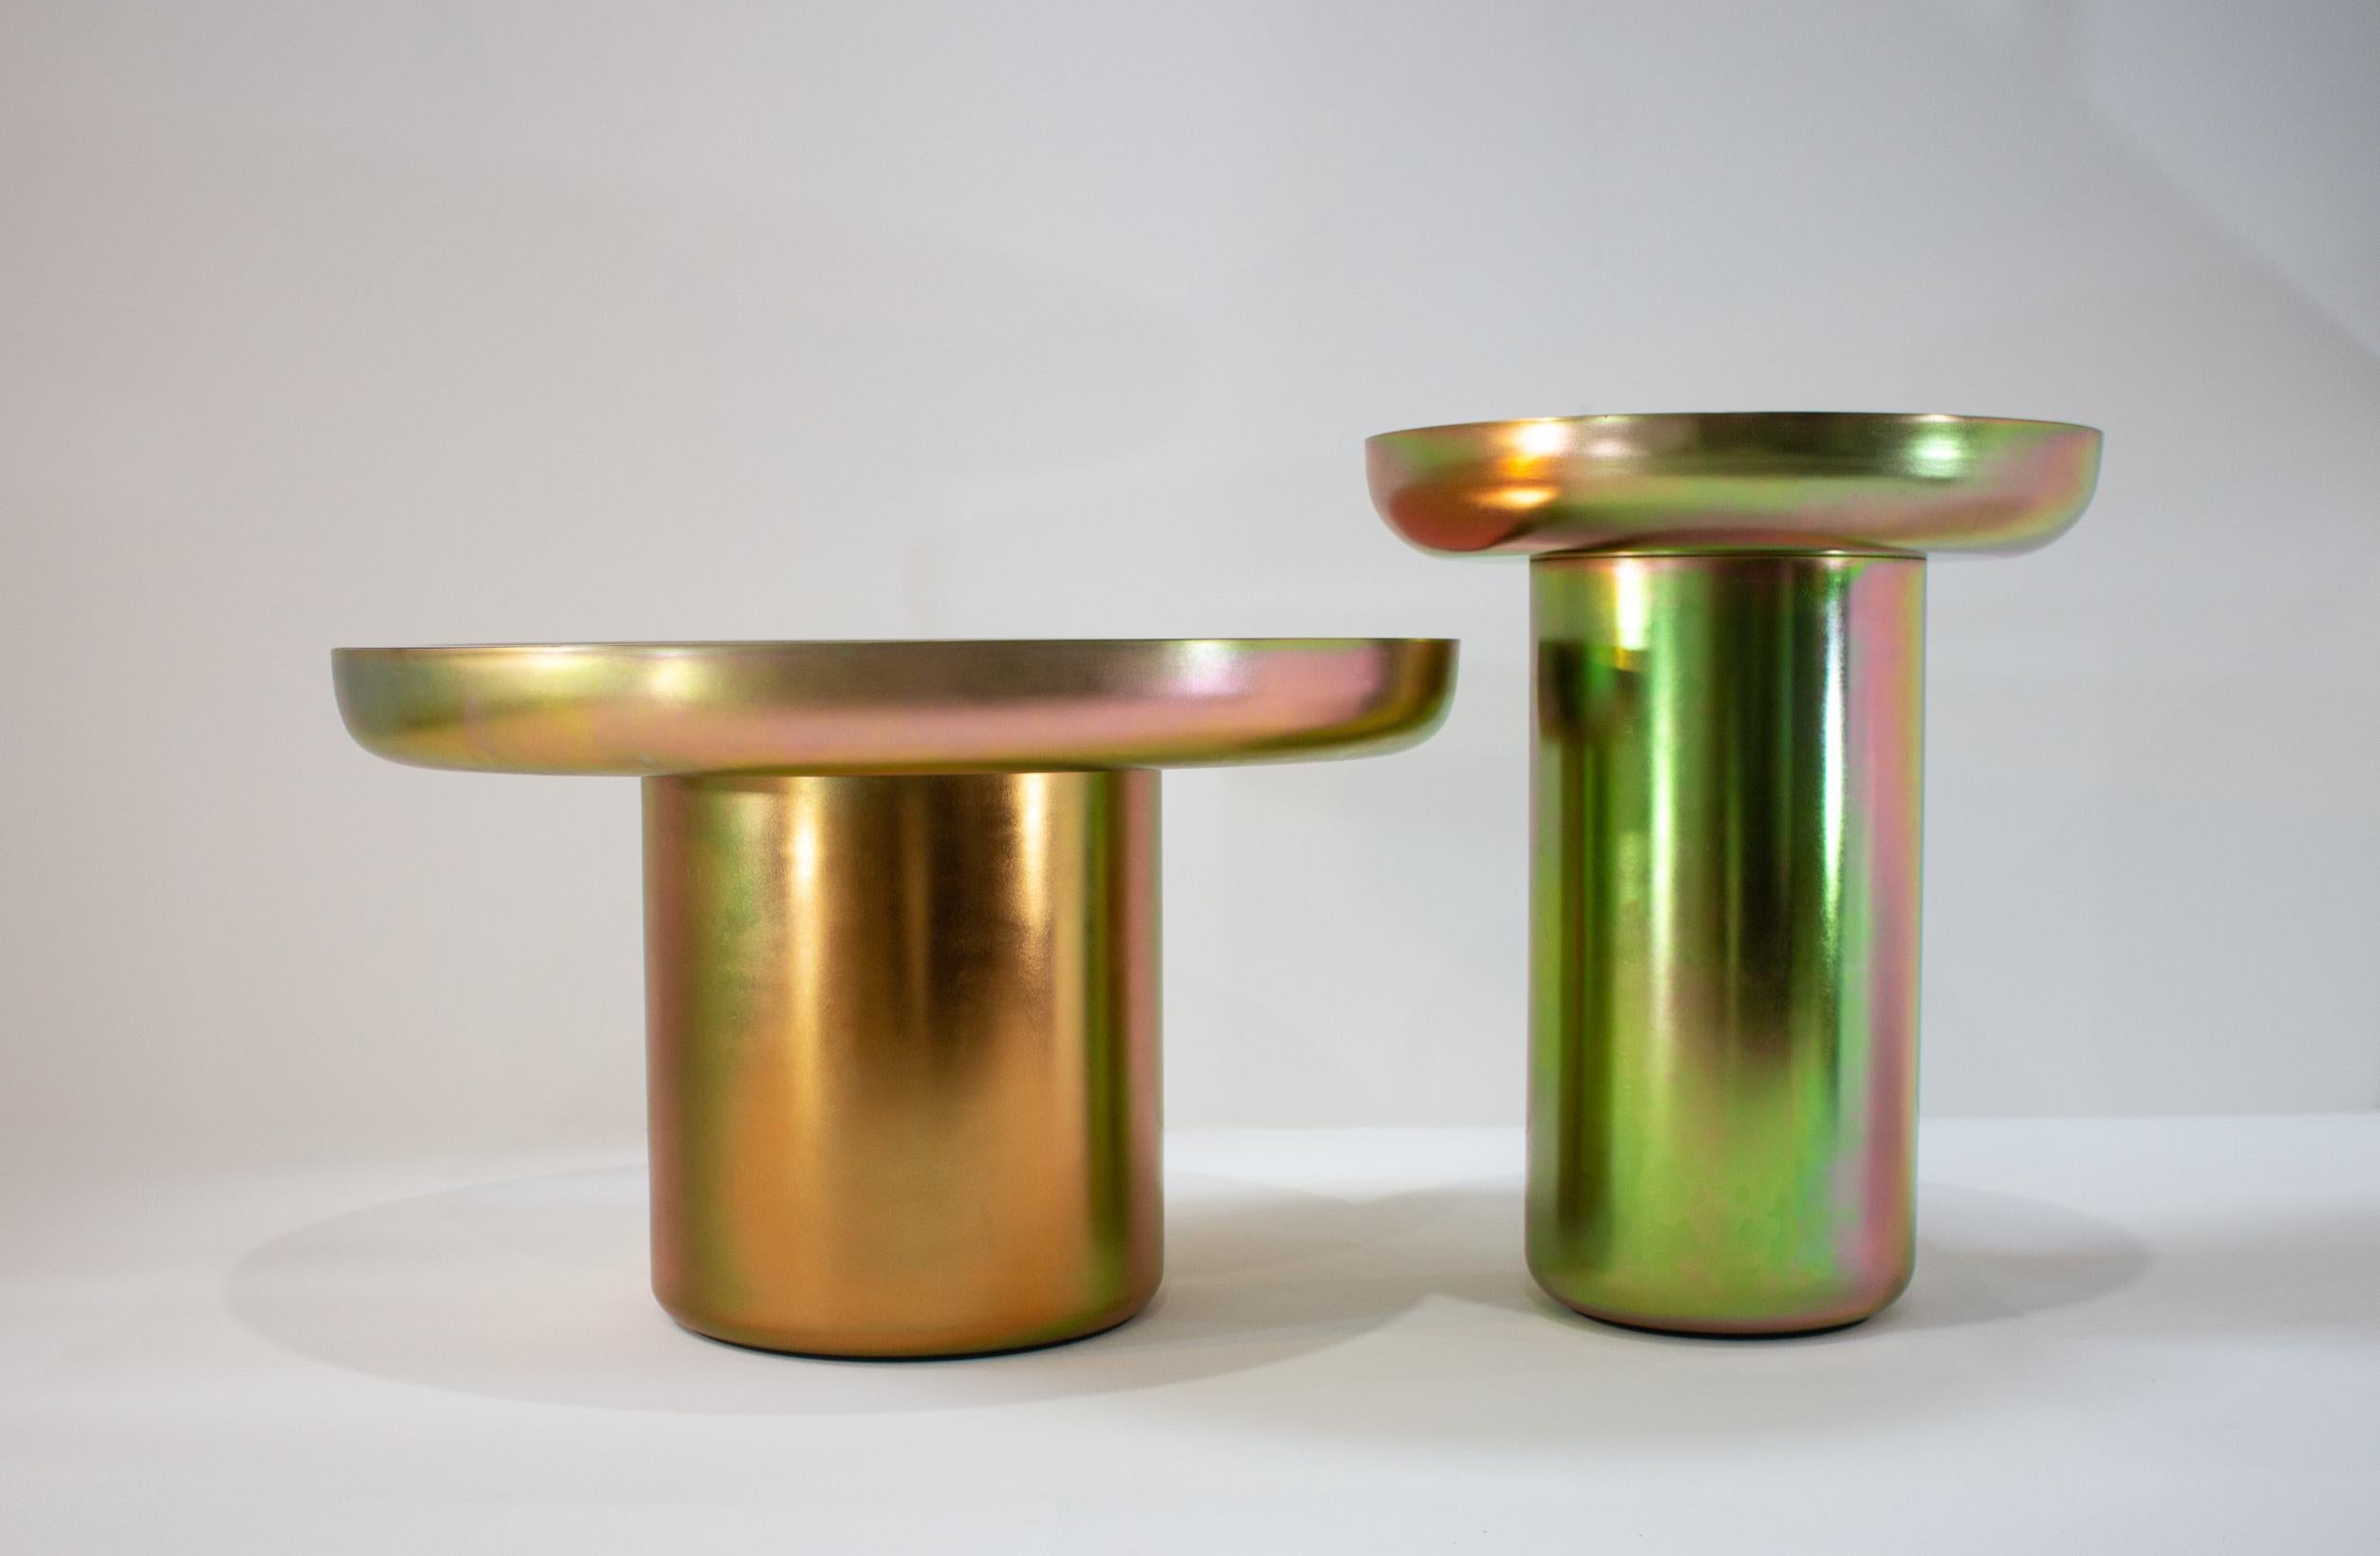 Acier Table basse contemporaine en acier et verre zinc Zinc Mood en vente